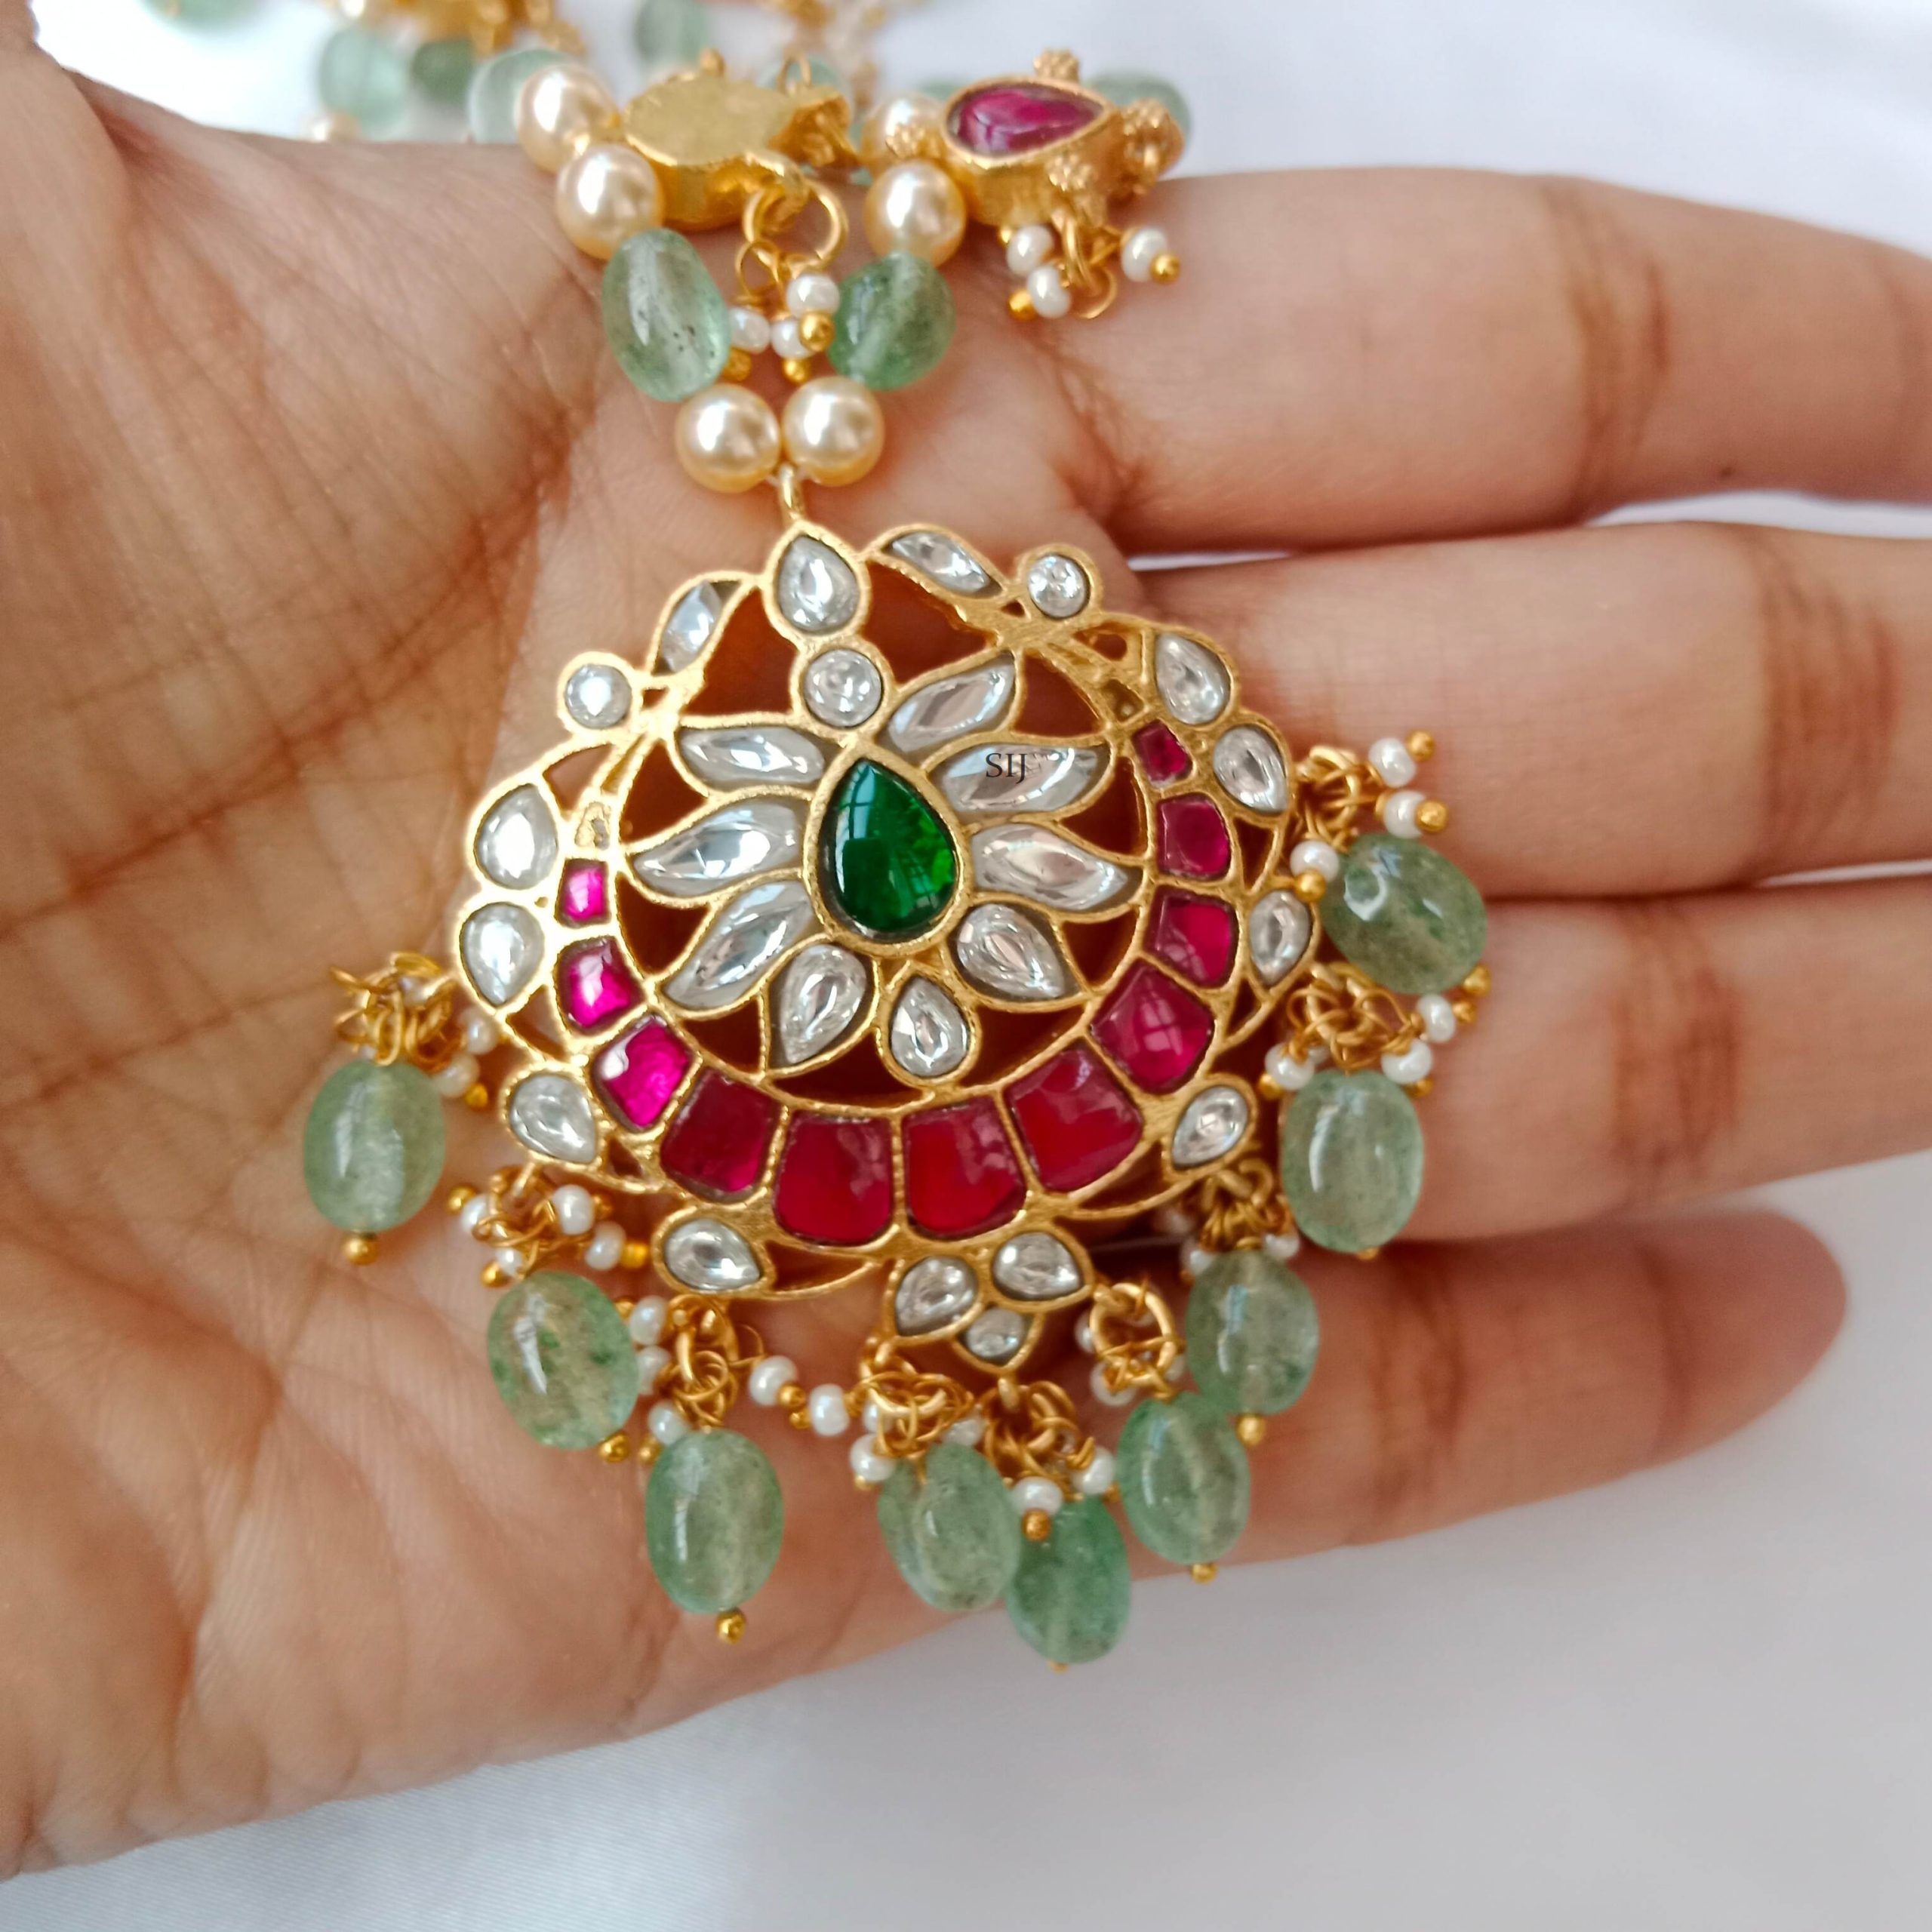 Aventurine Beads Necklace with Jadau Pendant